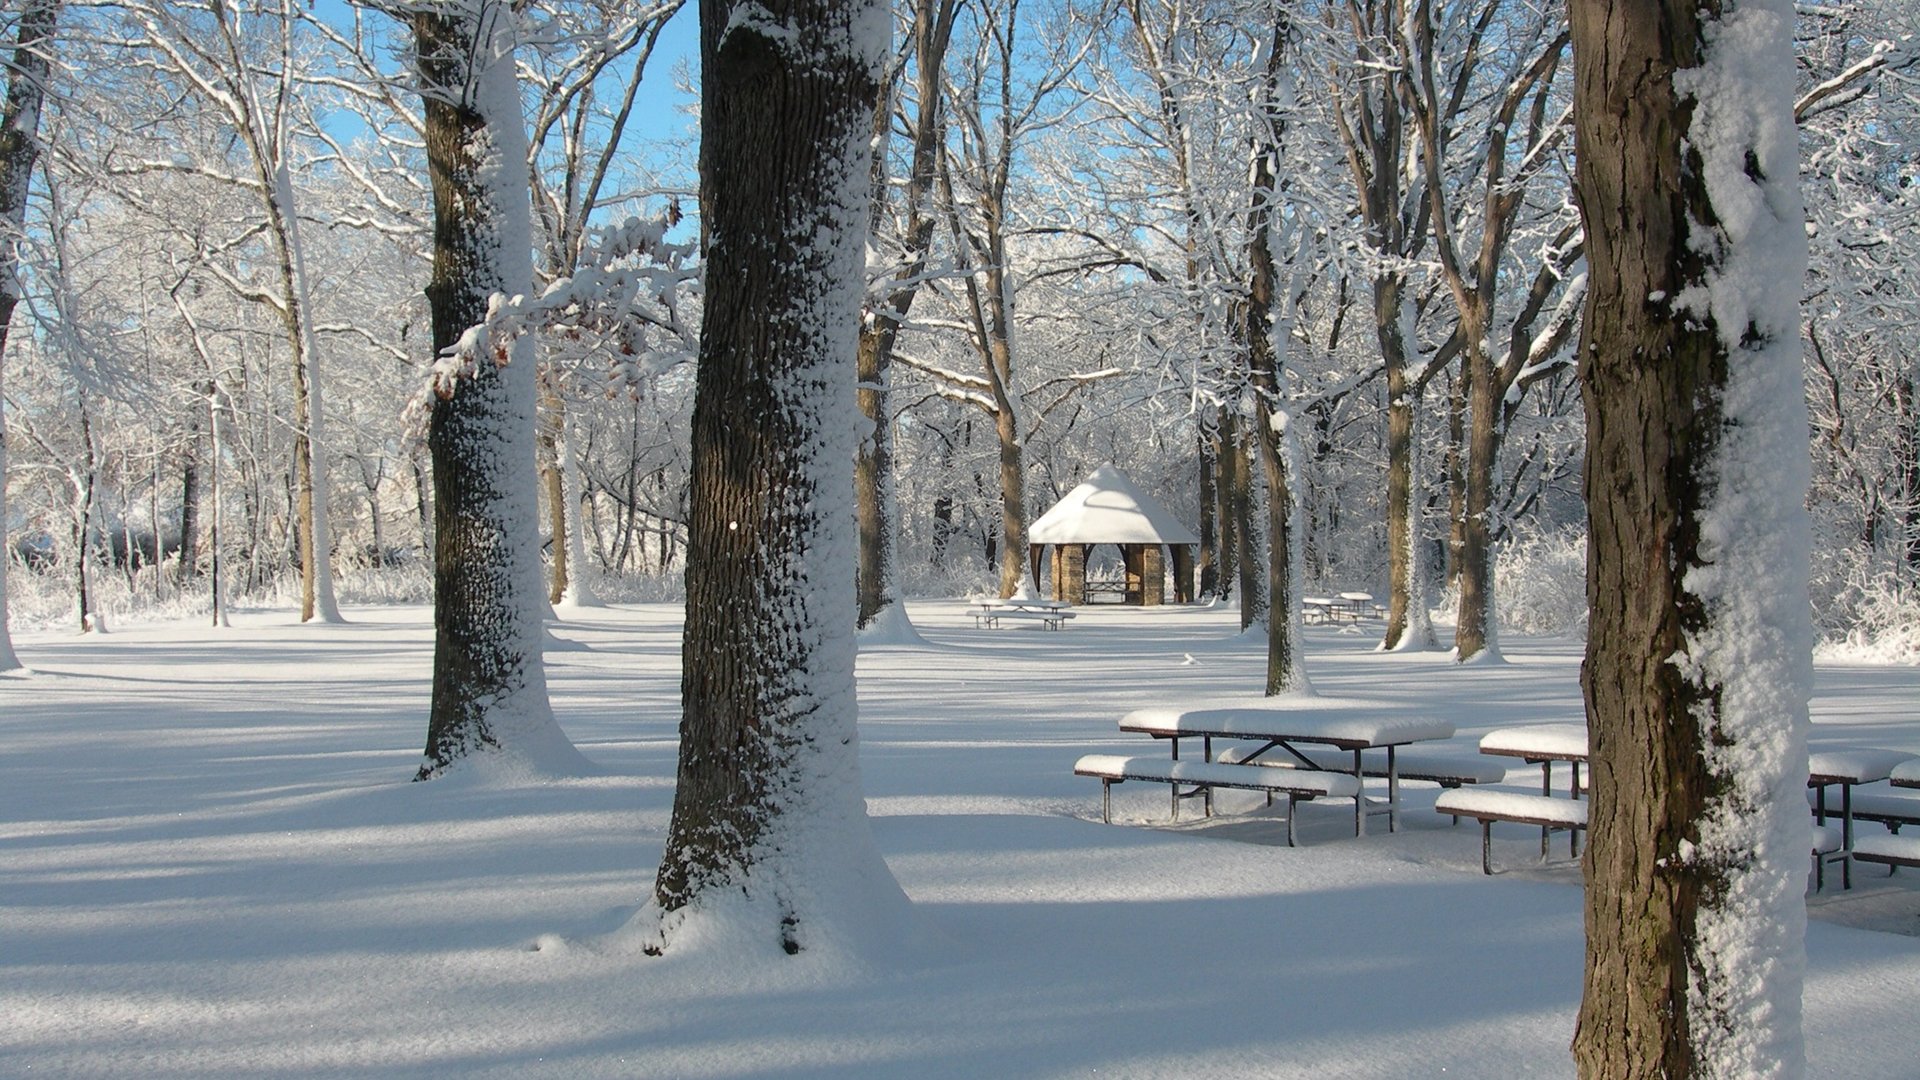 Salt-Creek-Park-winter-1920x1080